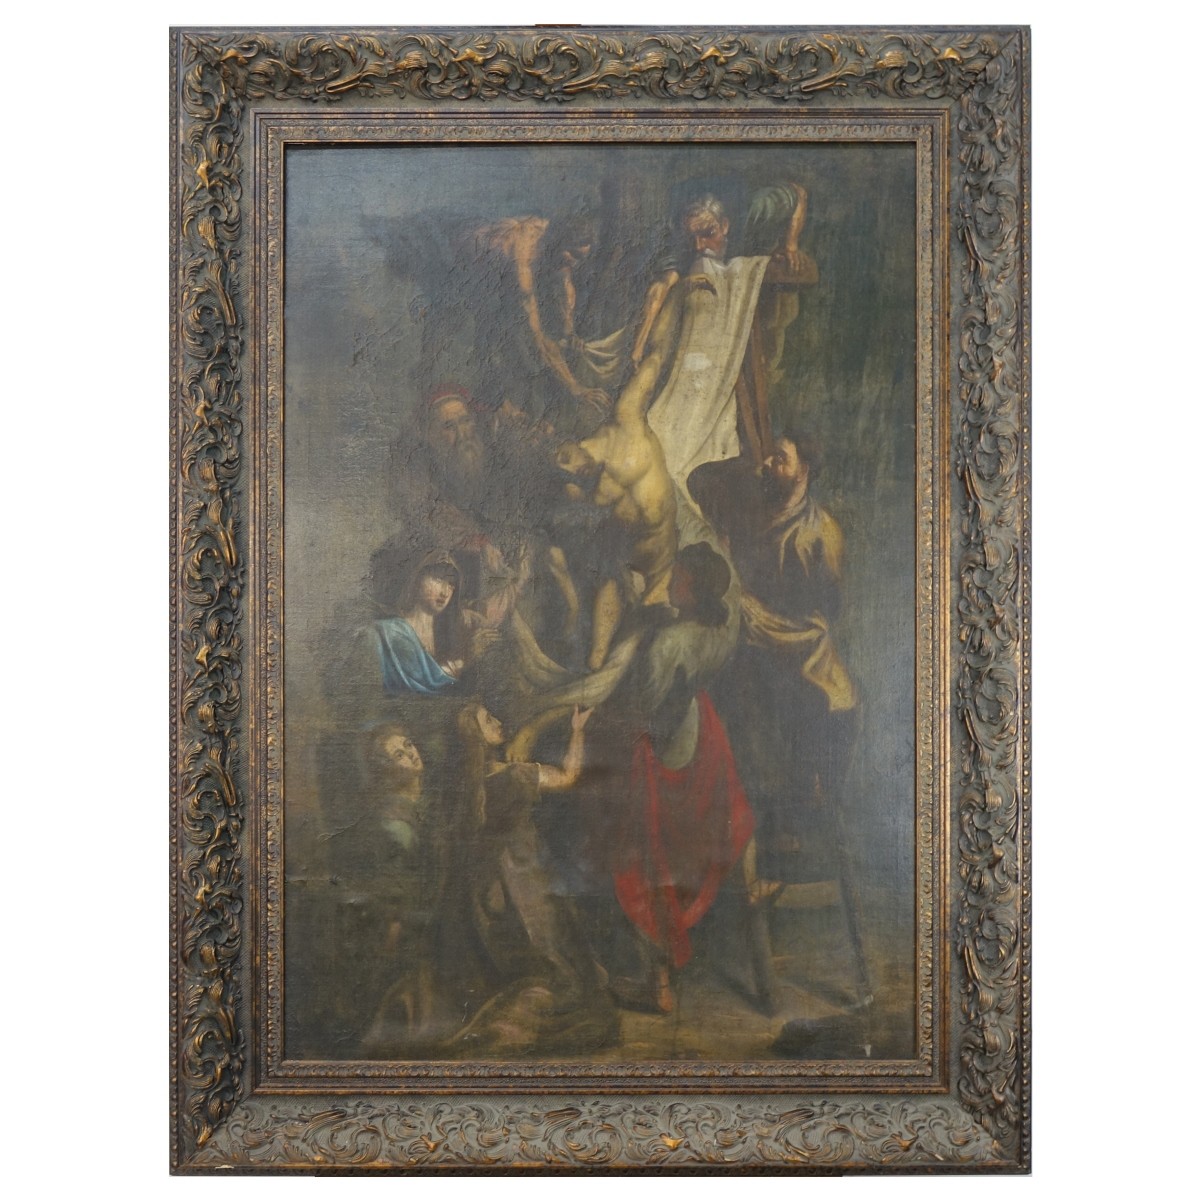 After: Peter Paul Rubens (1577 - 1640)